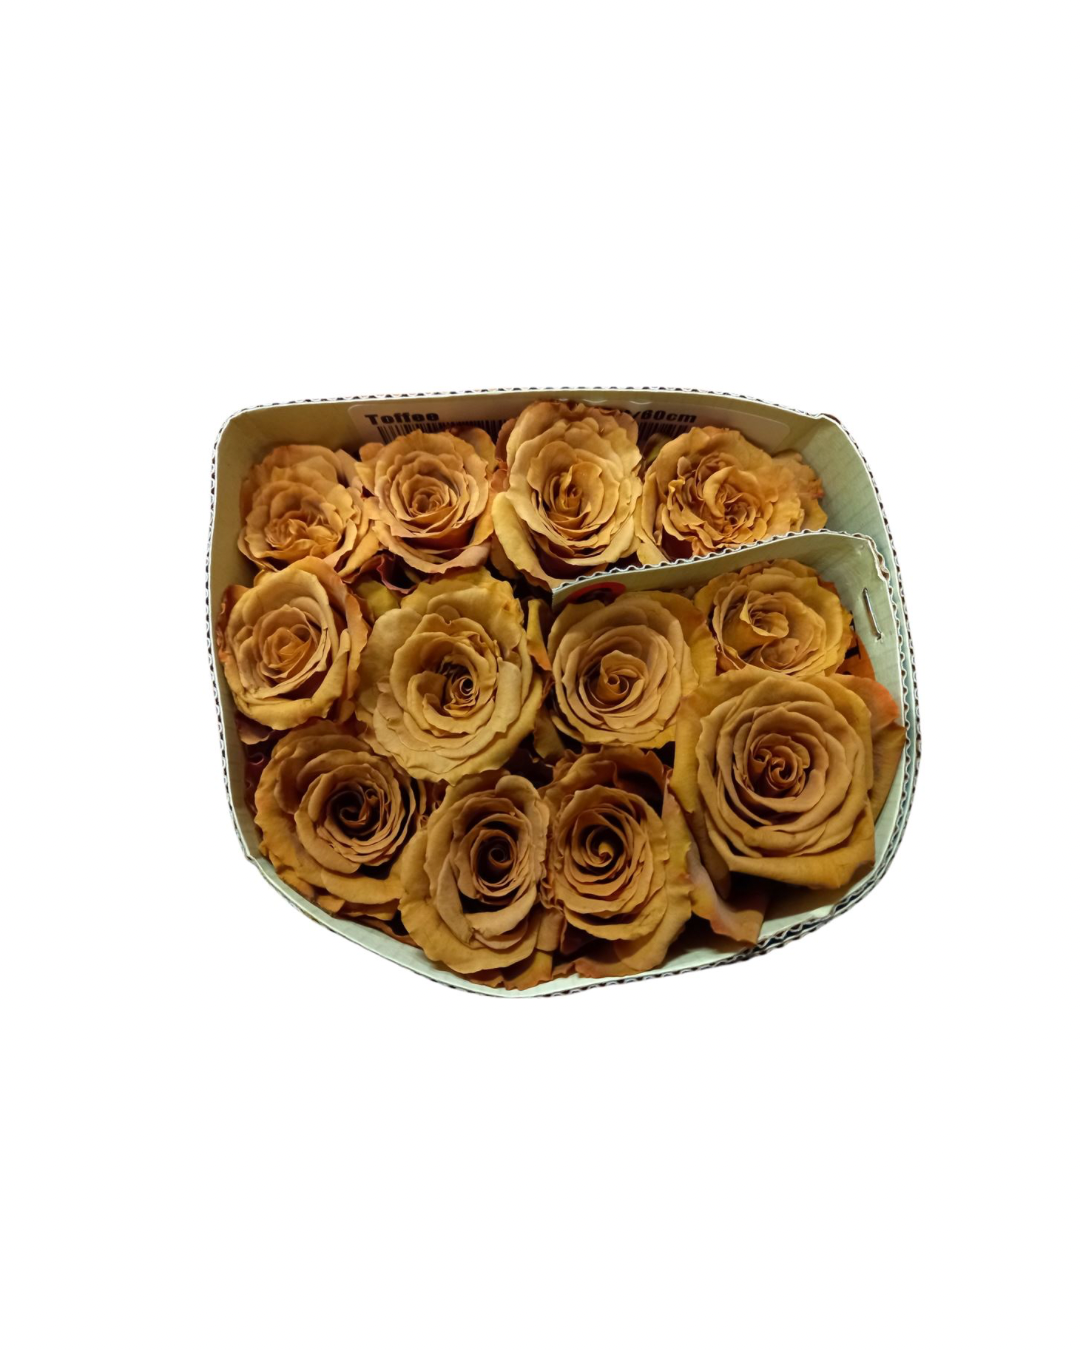 Ecuadorean Roses